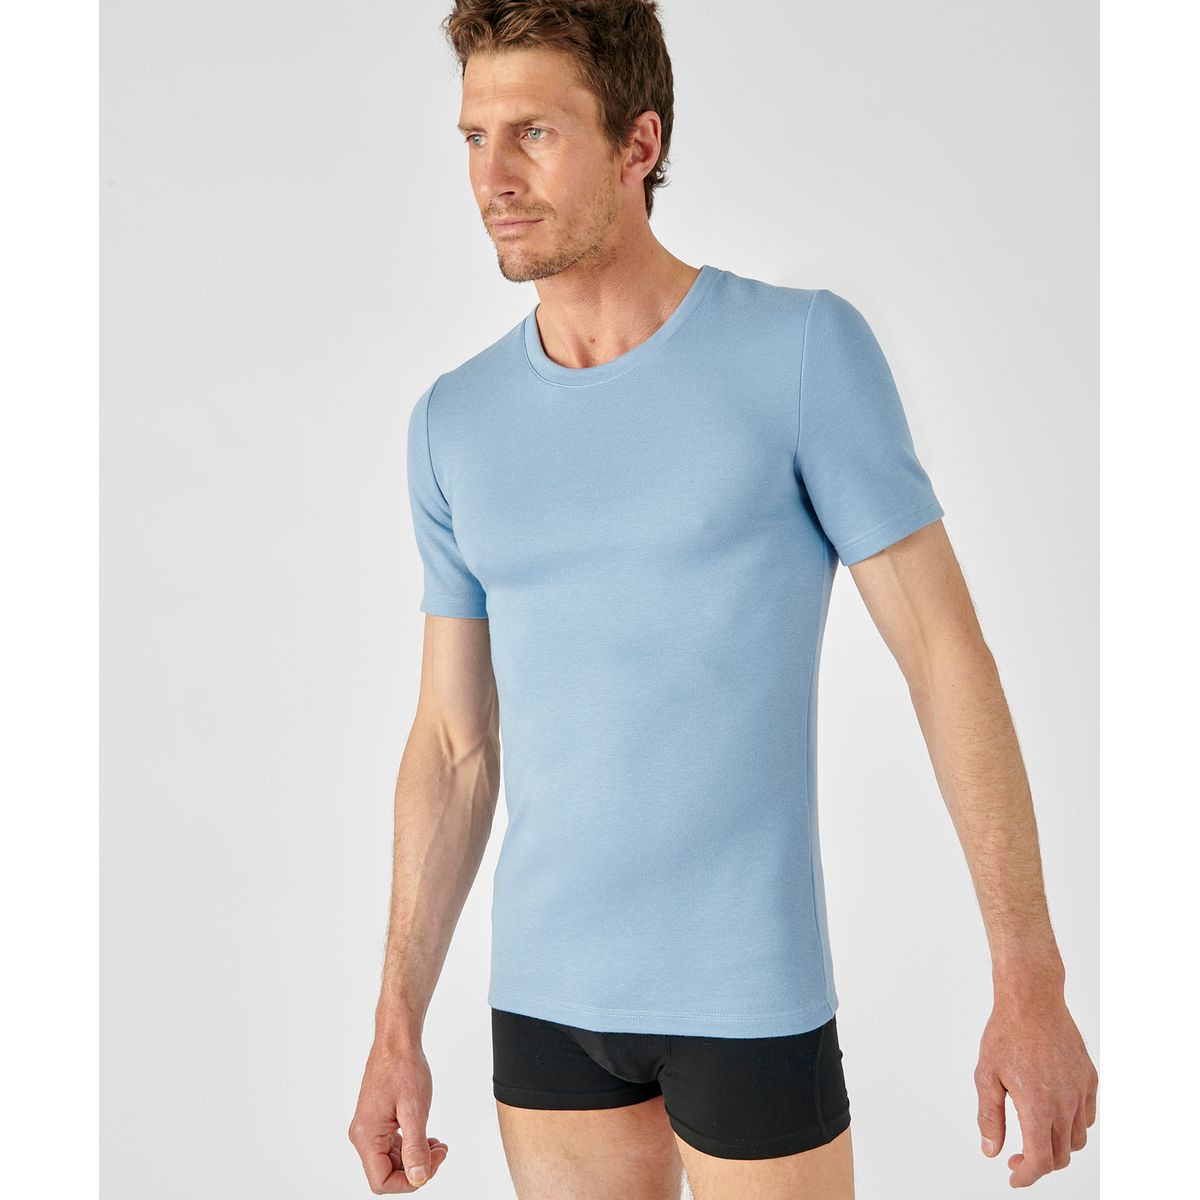 Tee shirt manches longues homme damart comfort thermolactyl 4 - bleu